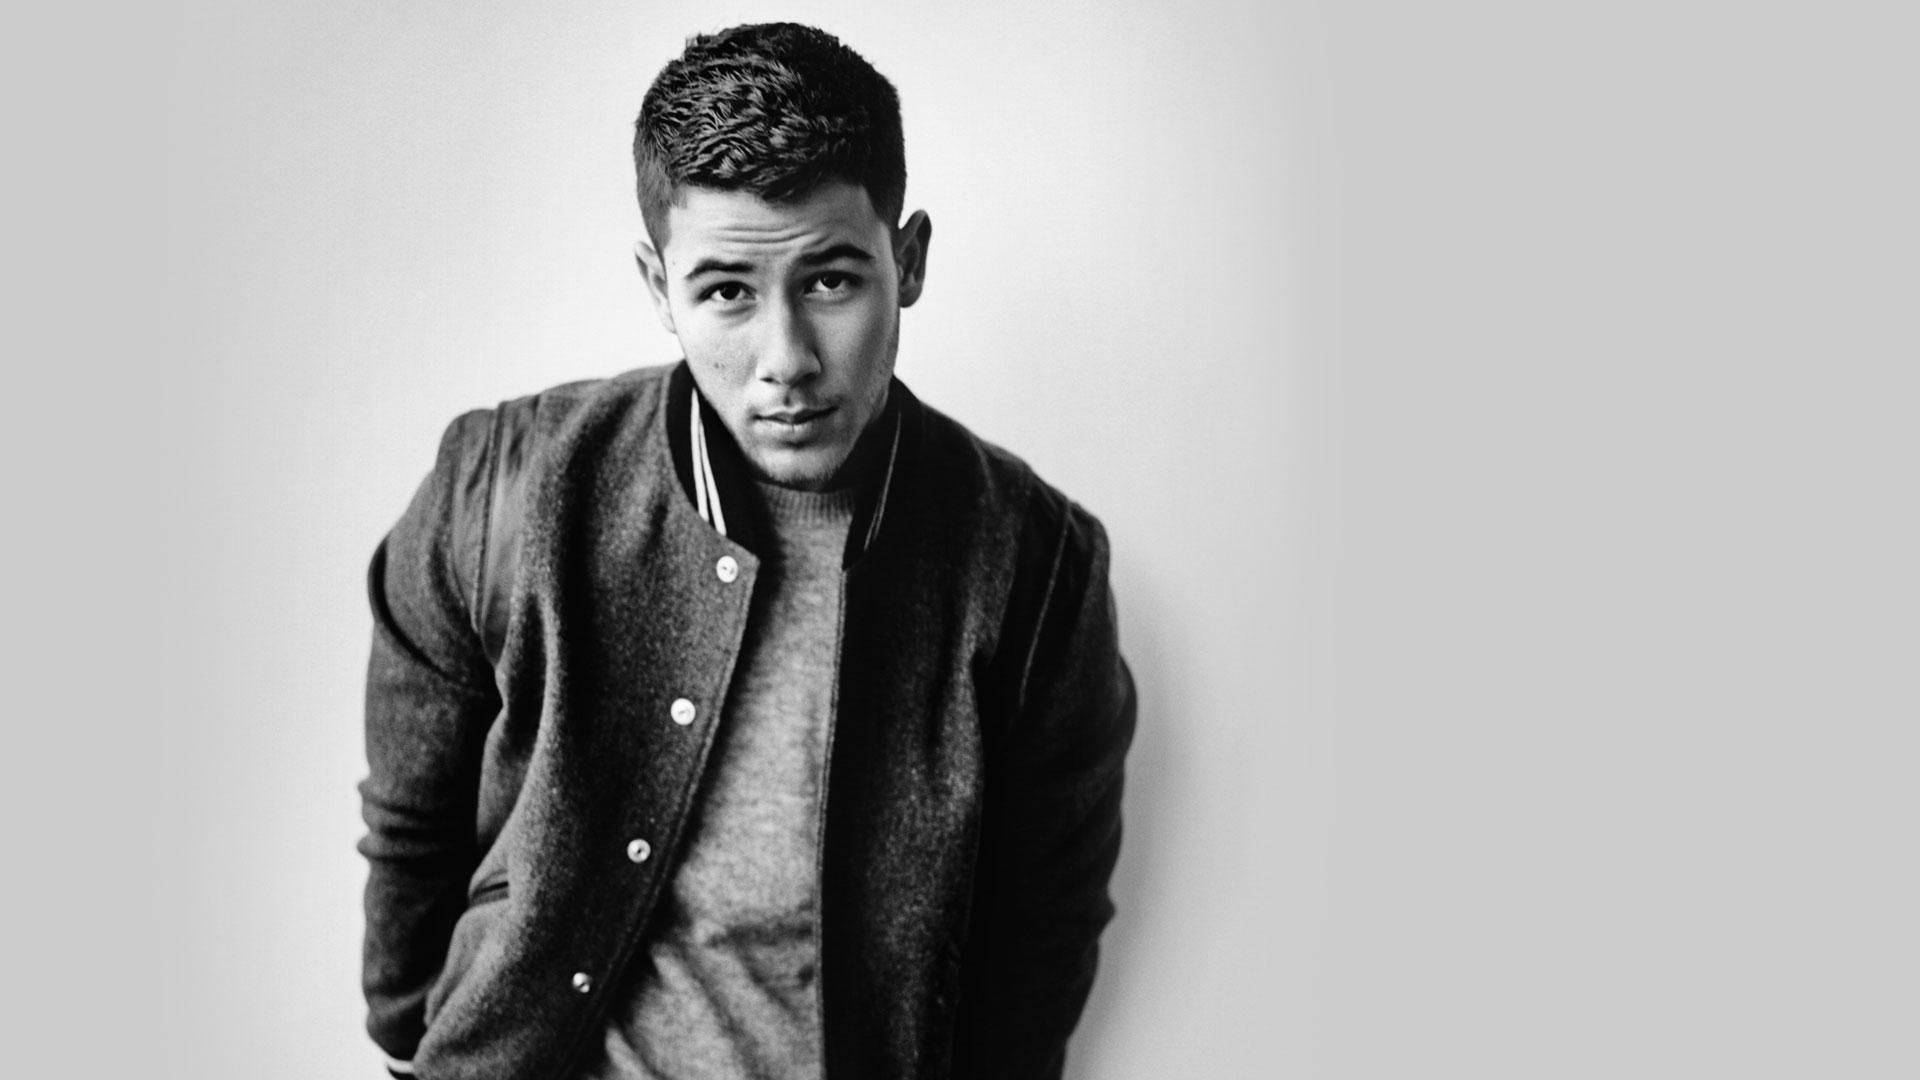 Charismatic Singer Nick Jonas Wallpaper